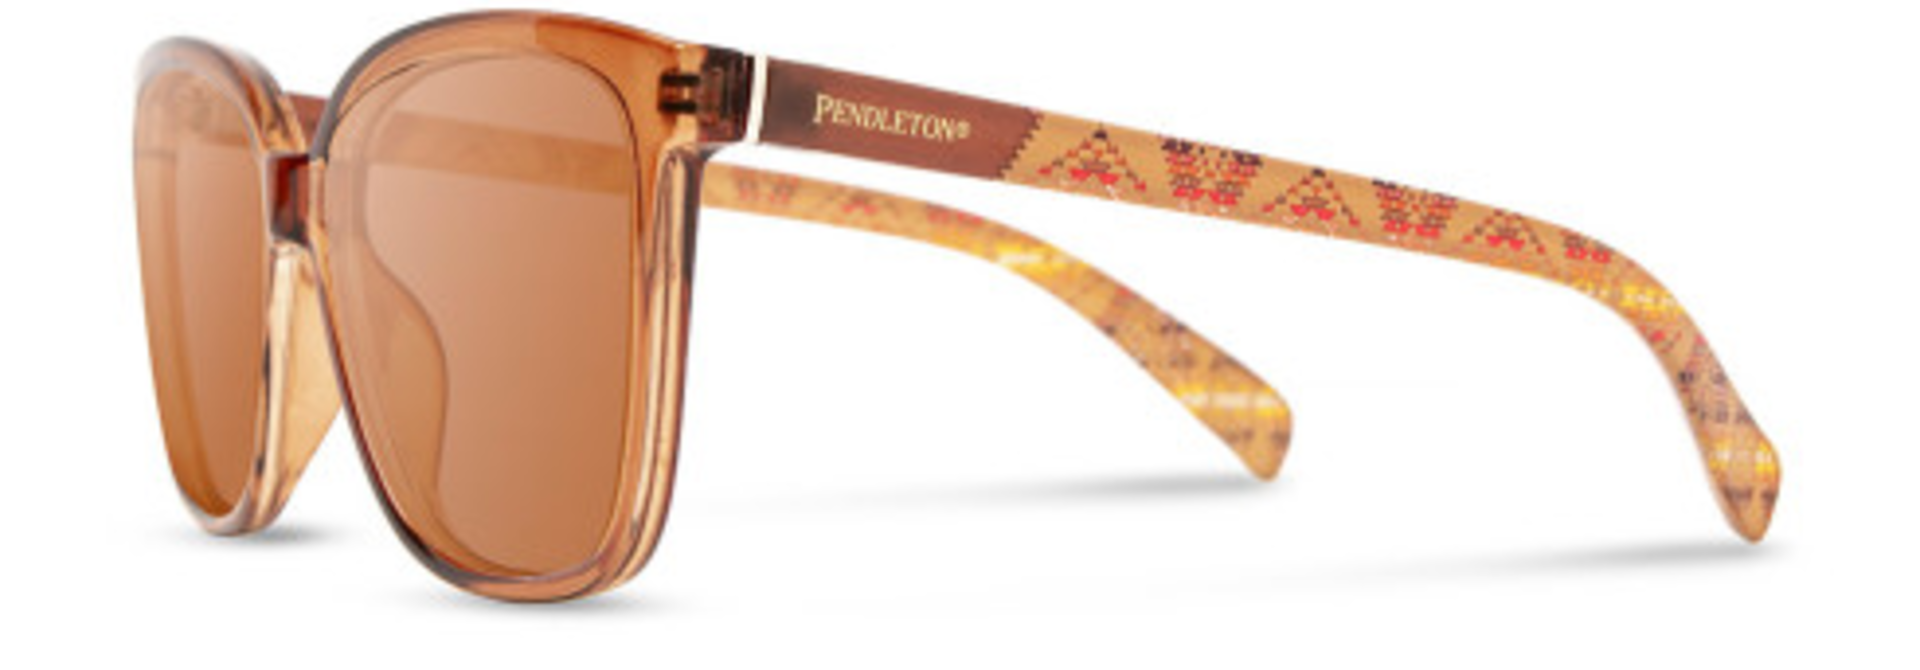 Pendleton Sunglasses Rylahn - Mission Trails Brown